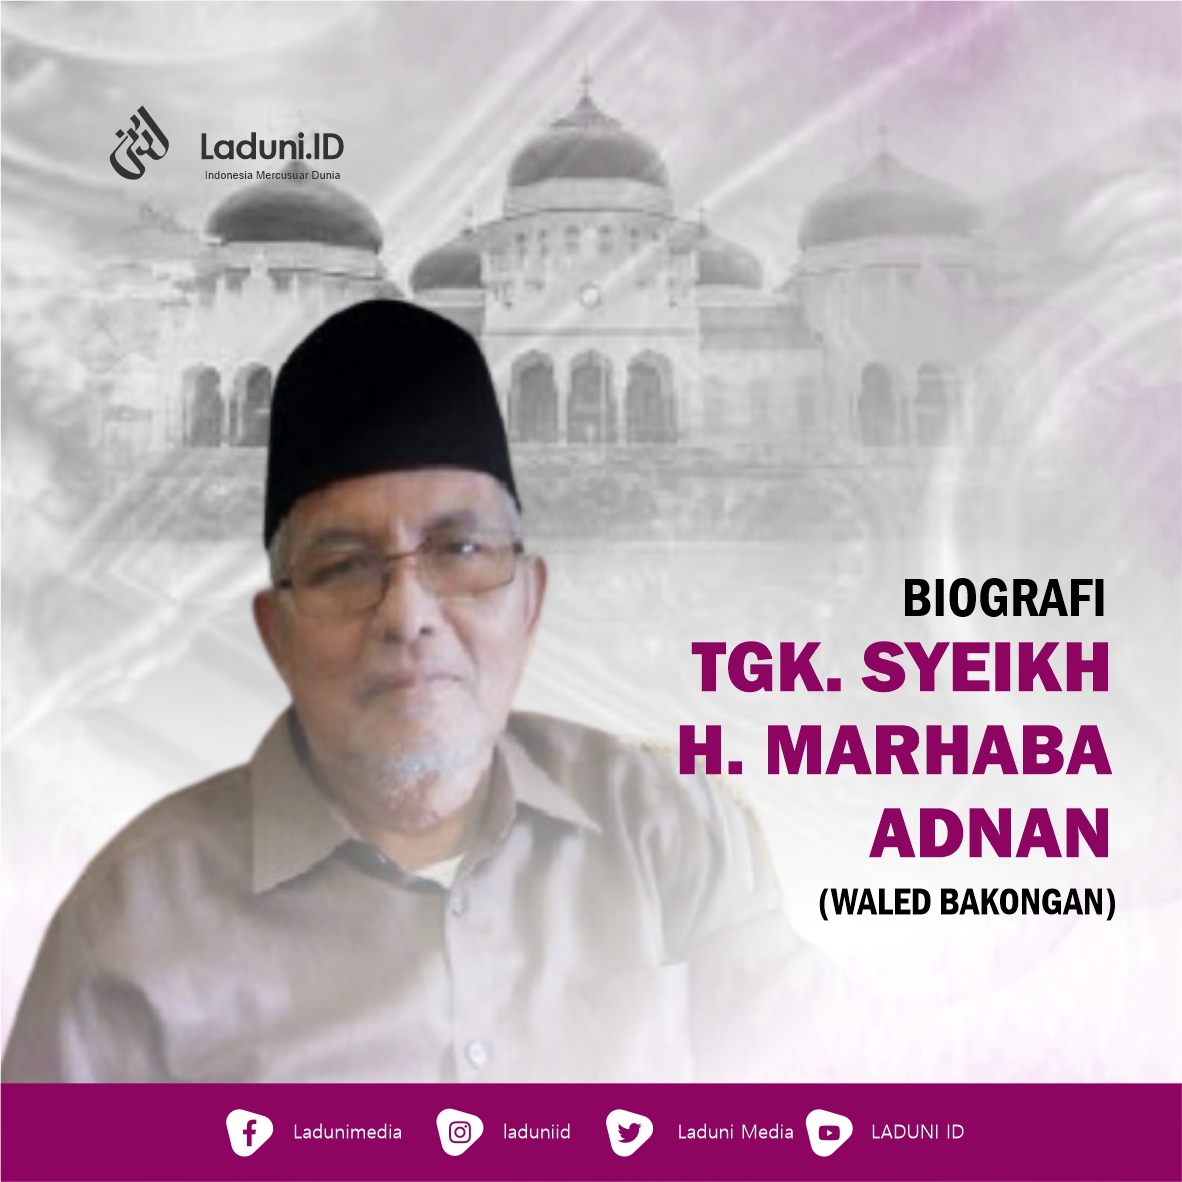 Biografi Tgk. Syeikh. H. Marhaban Adnan (Waled Bakongan)